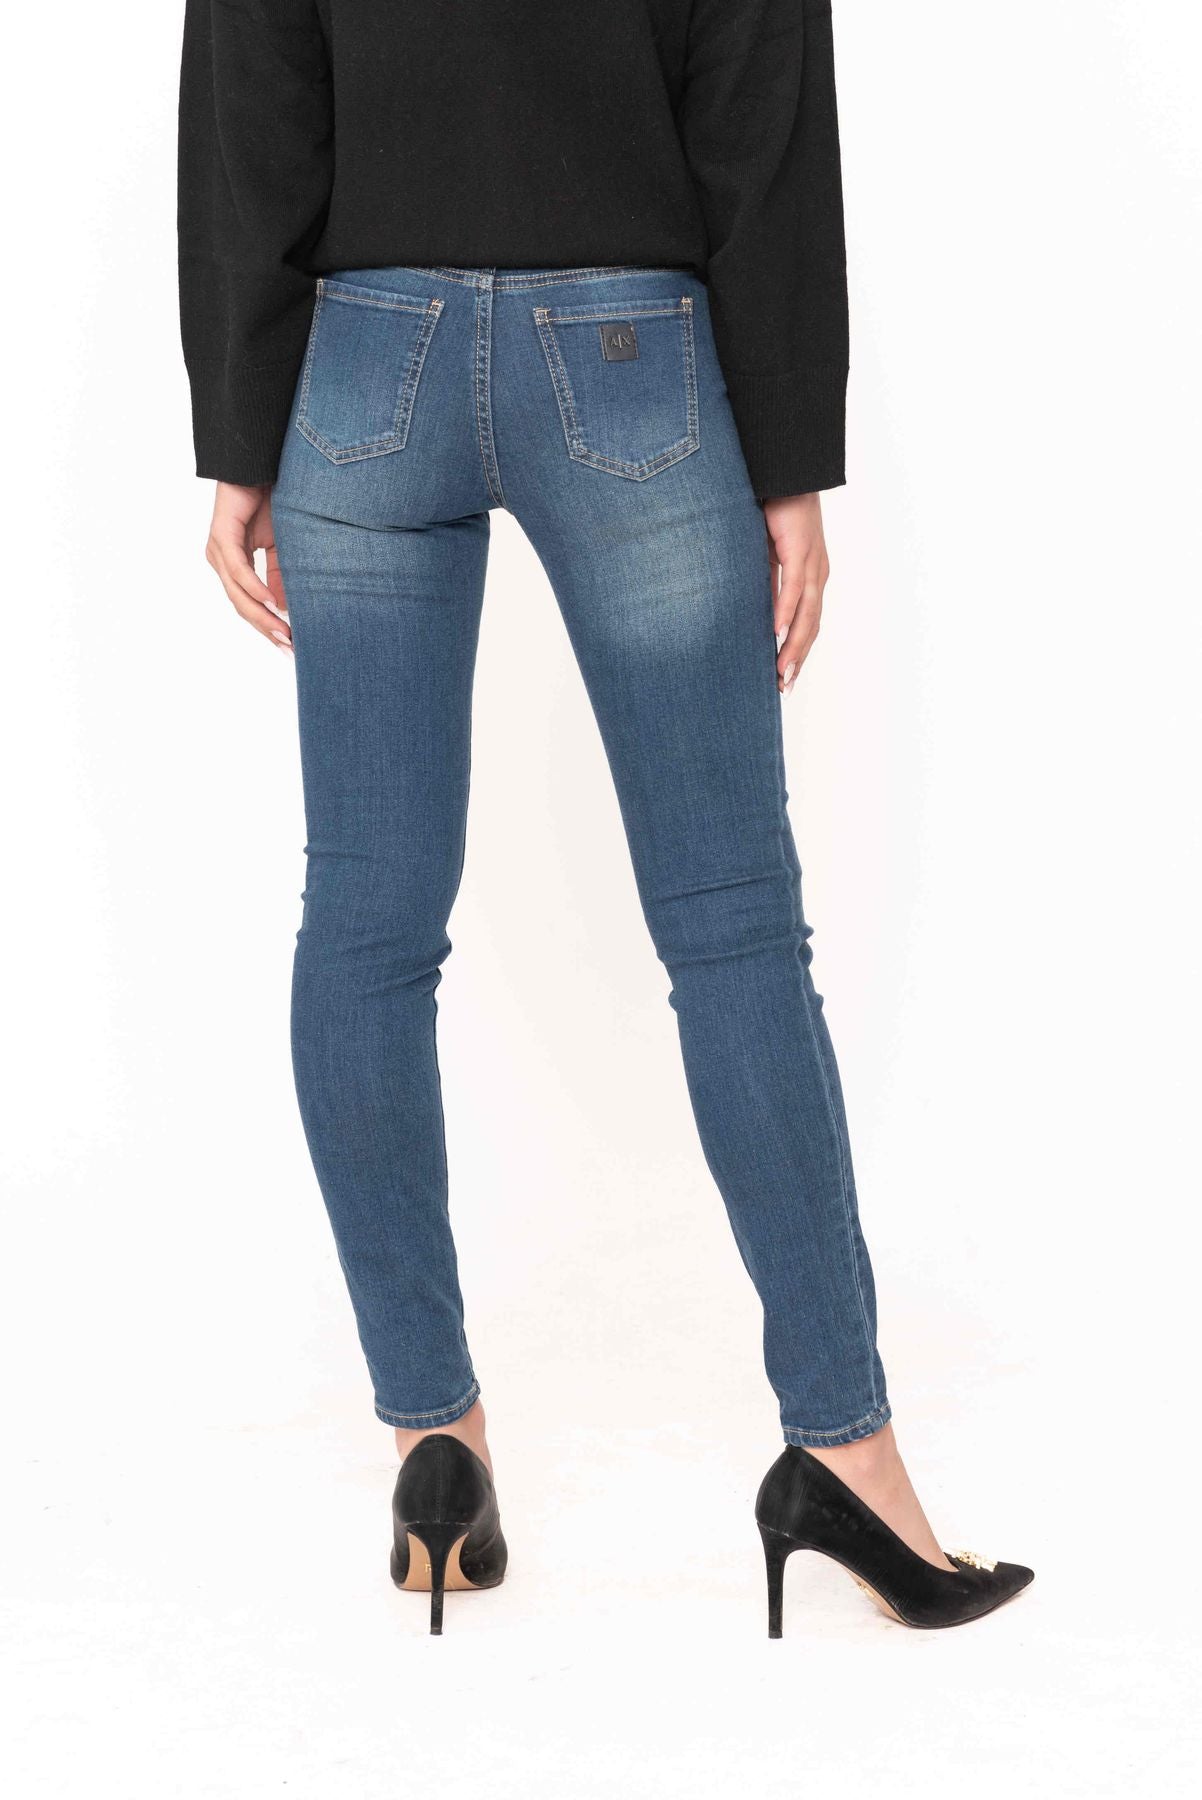 Jeans super skinny - Taxi Bleu Moda Donna - 2000000053806